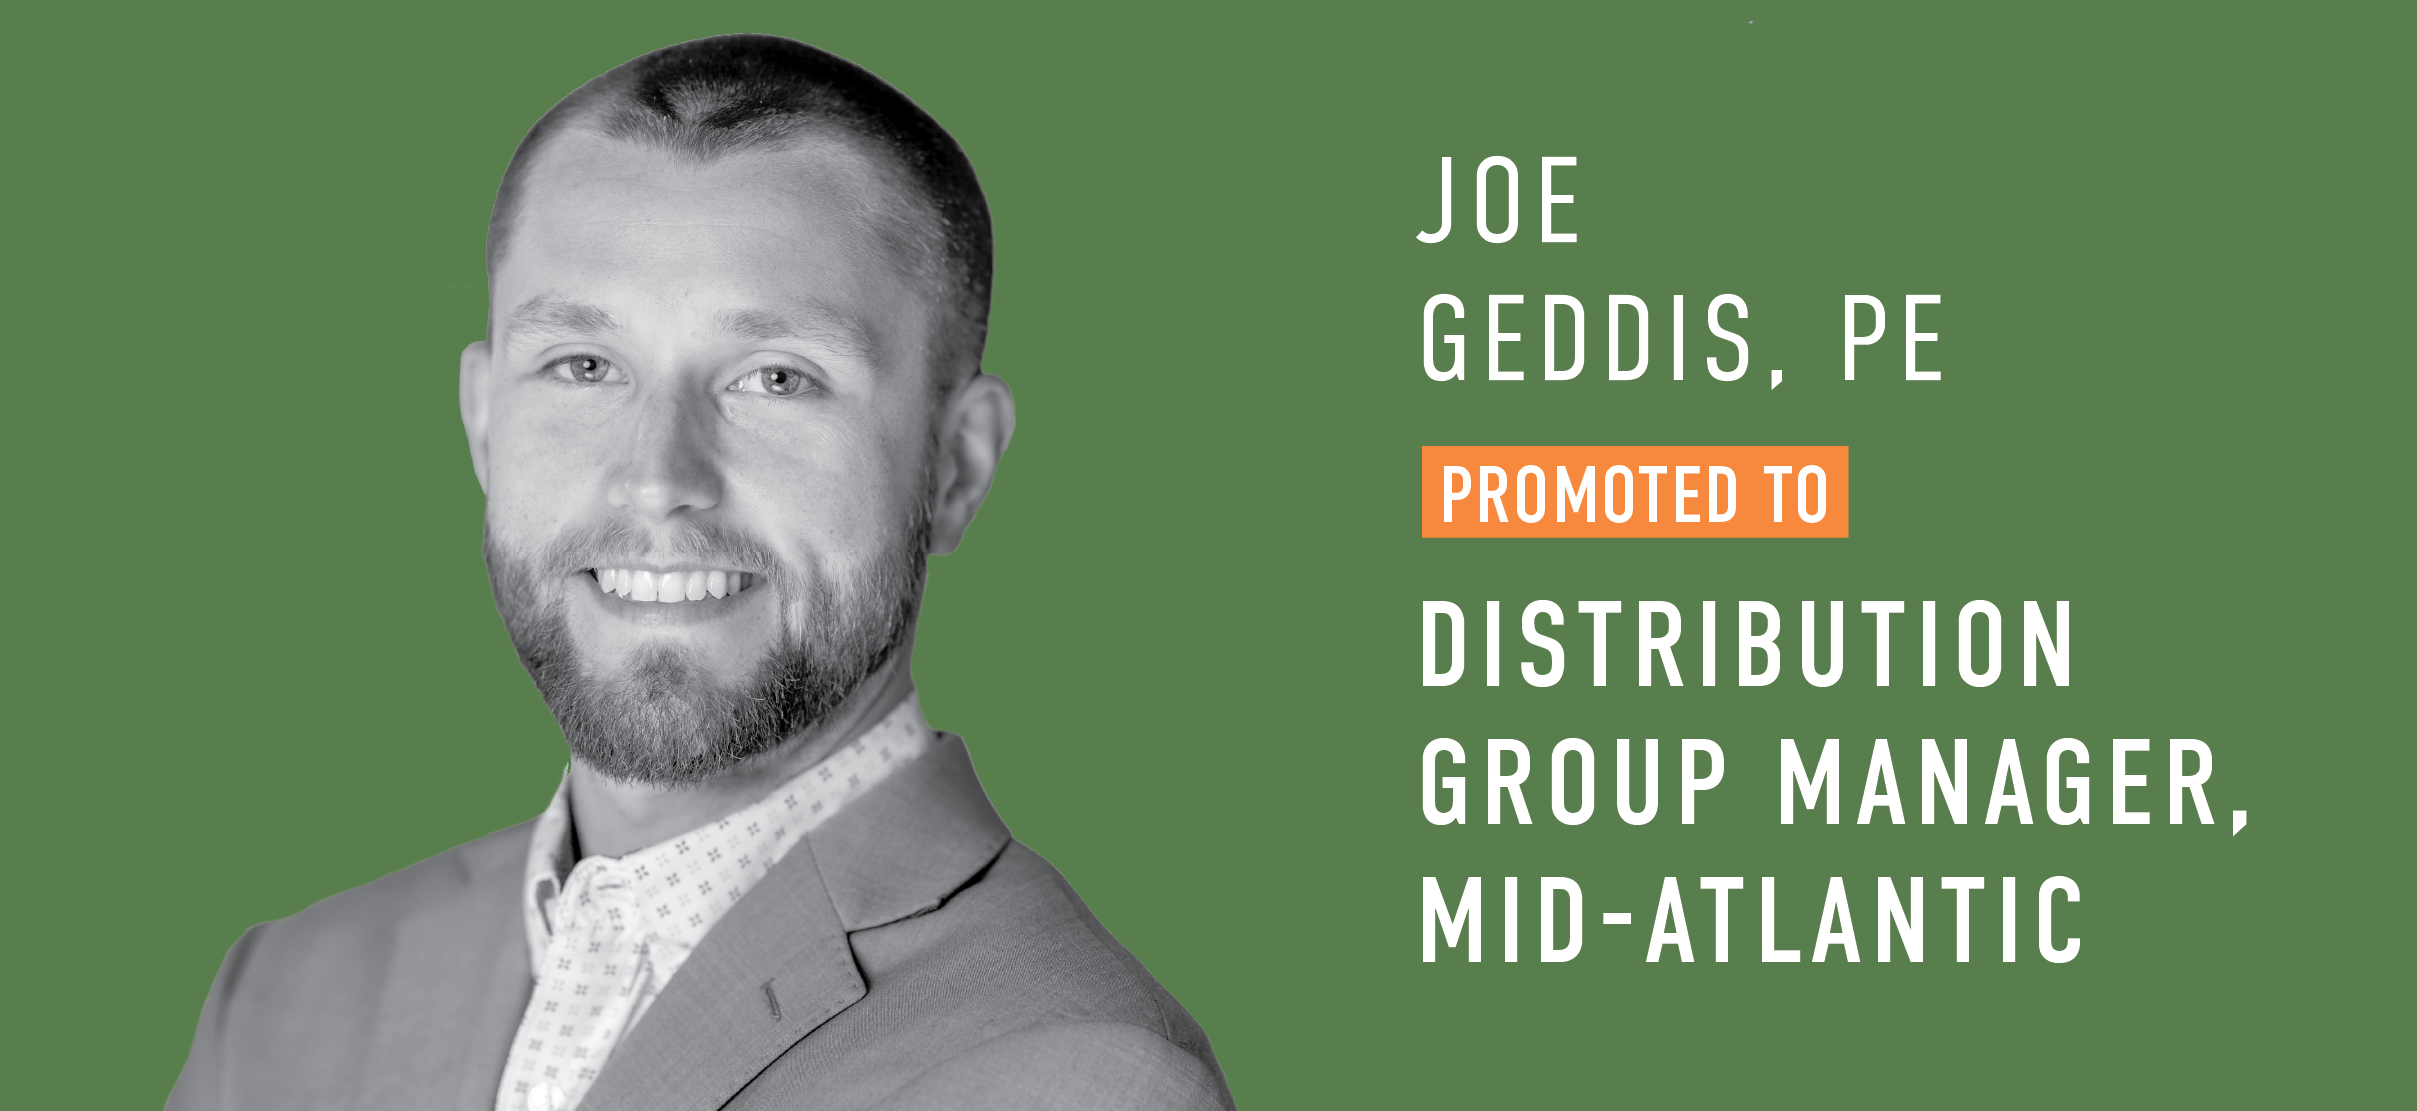 Joe Geddis, PE Promoted to Distribution Group Manager, Mid-Atlantic